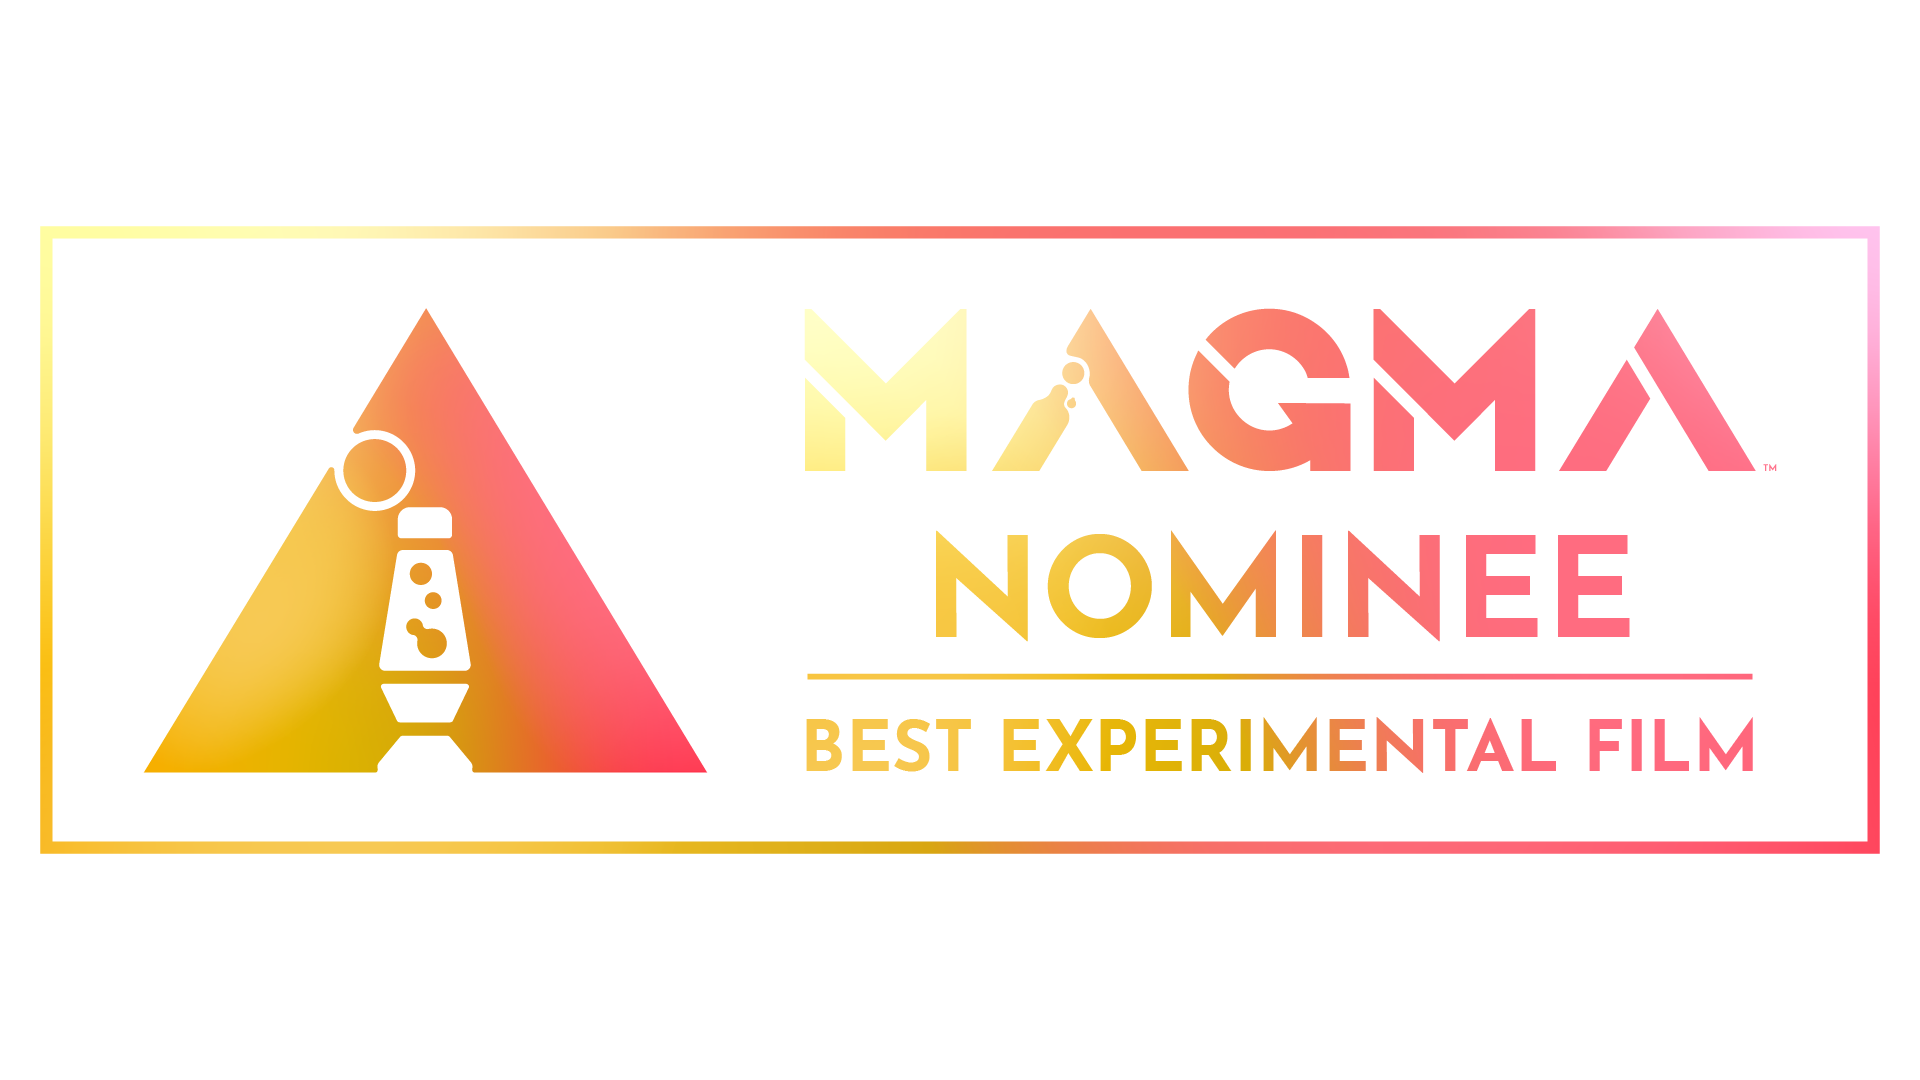 Magma Nominee Best experimental film